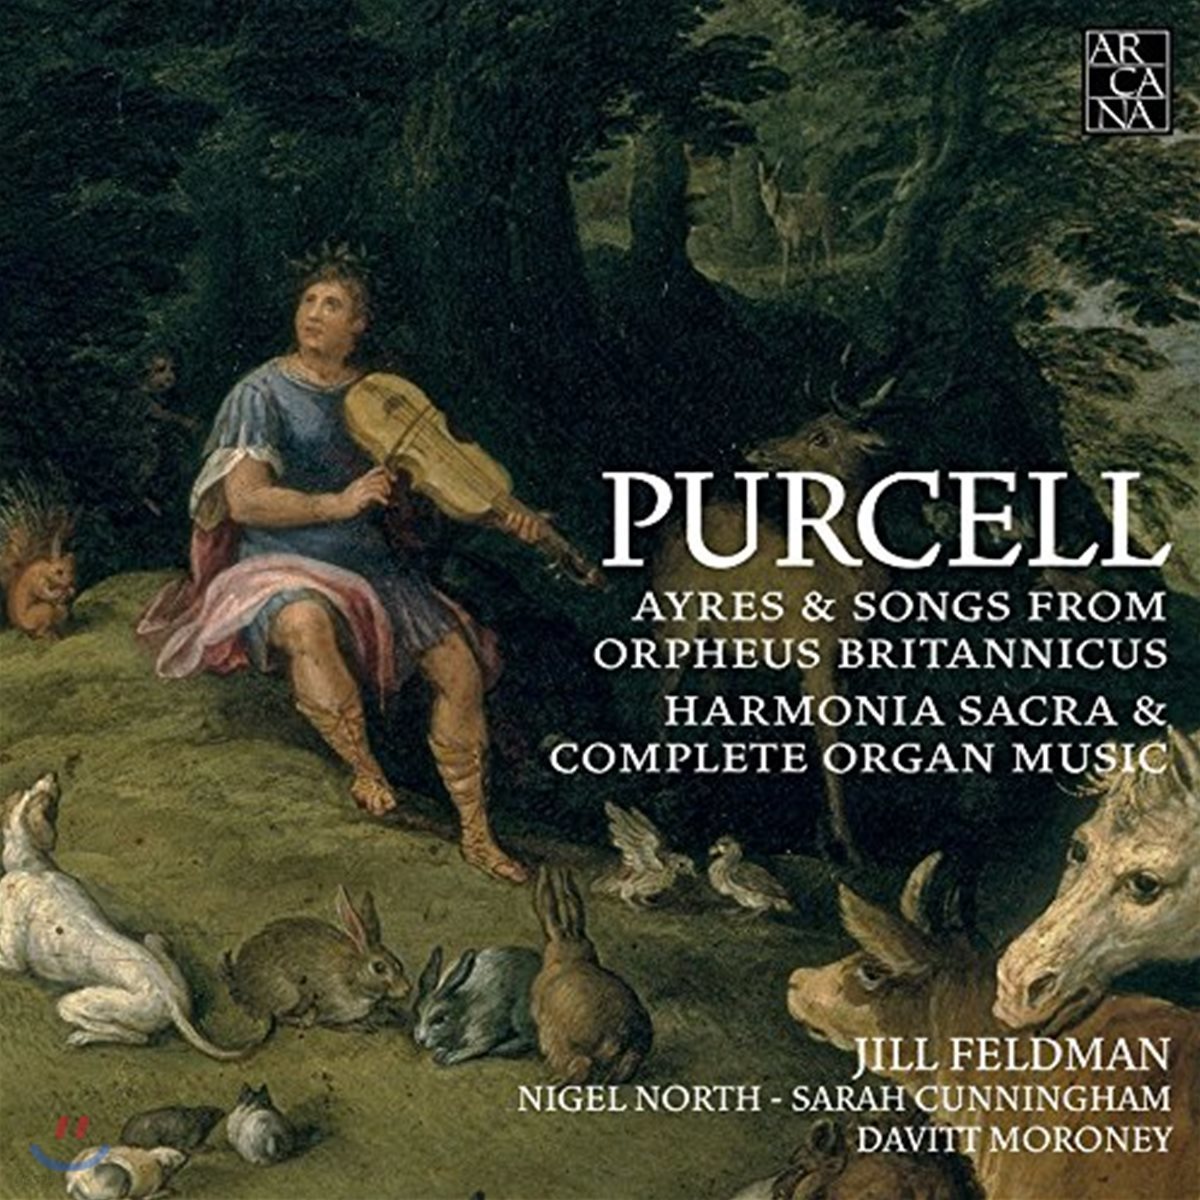 Jill Feldman 퍼셀: &#39;오르페우스 브리타니쿠스&#39; 아리와와 노래집, 오르간 작품 전곡 - 질 펠드먼 (Purcell: Ayres &amp; Songs from Orpheus Britannicus, Harmonia Sacra &amp; Complete Organ Music)